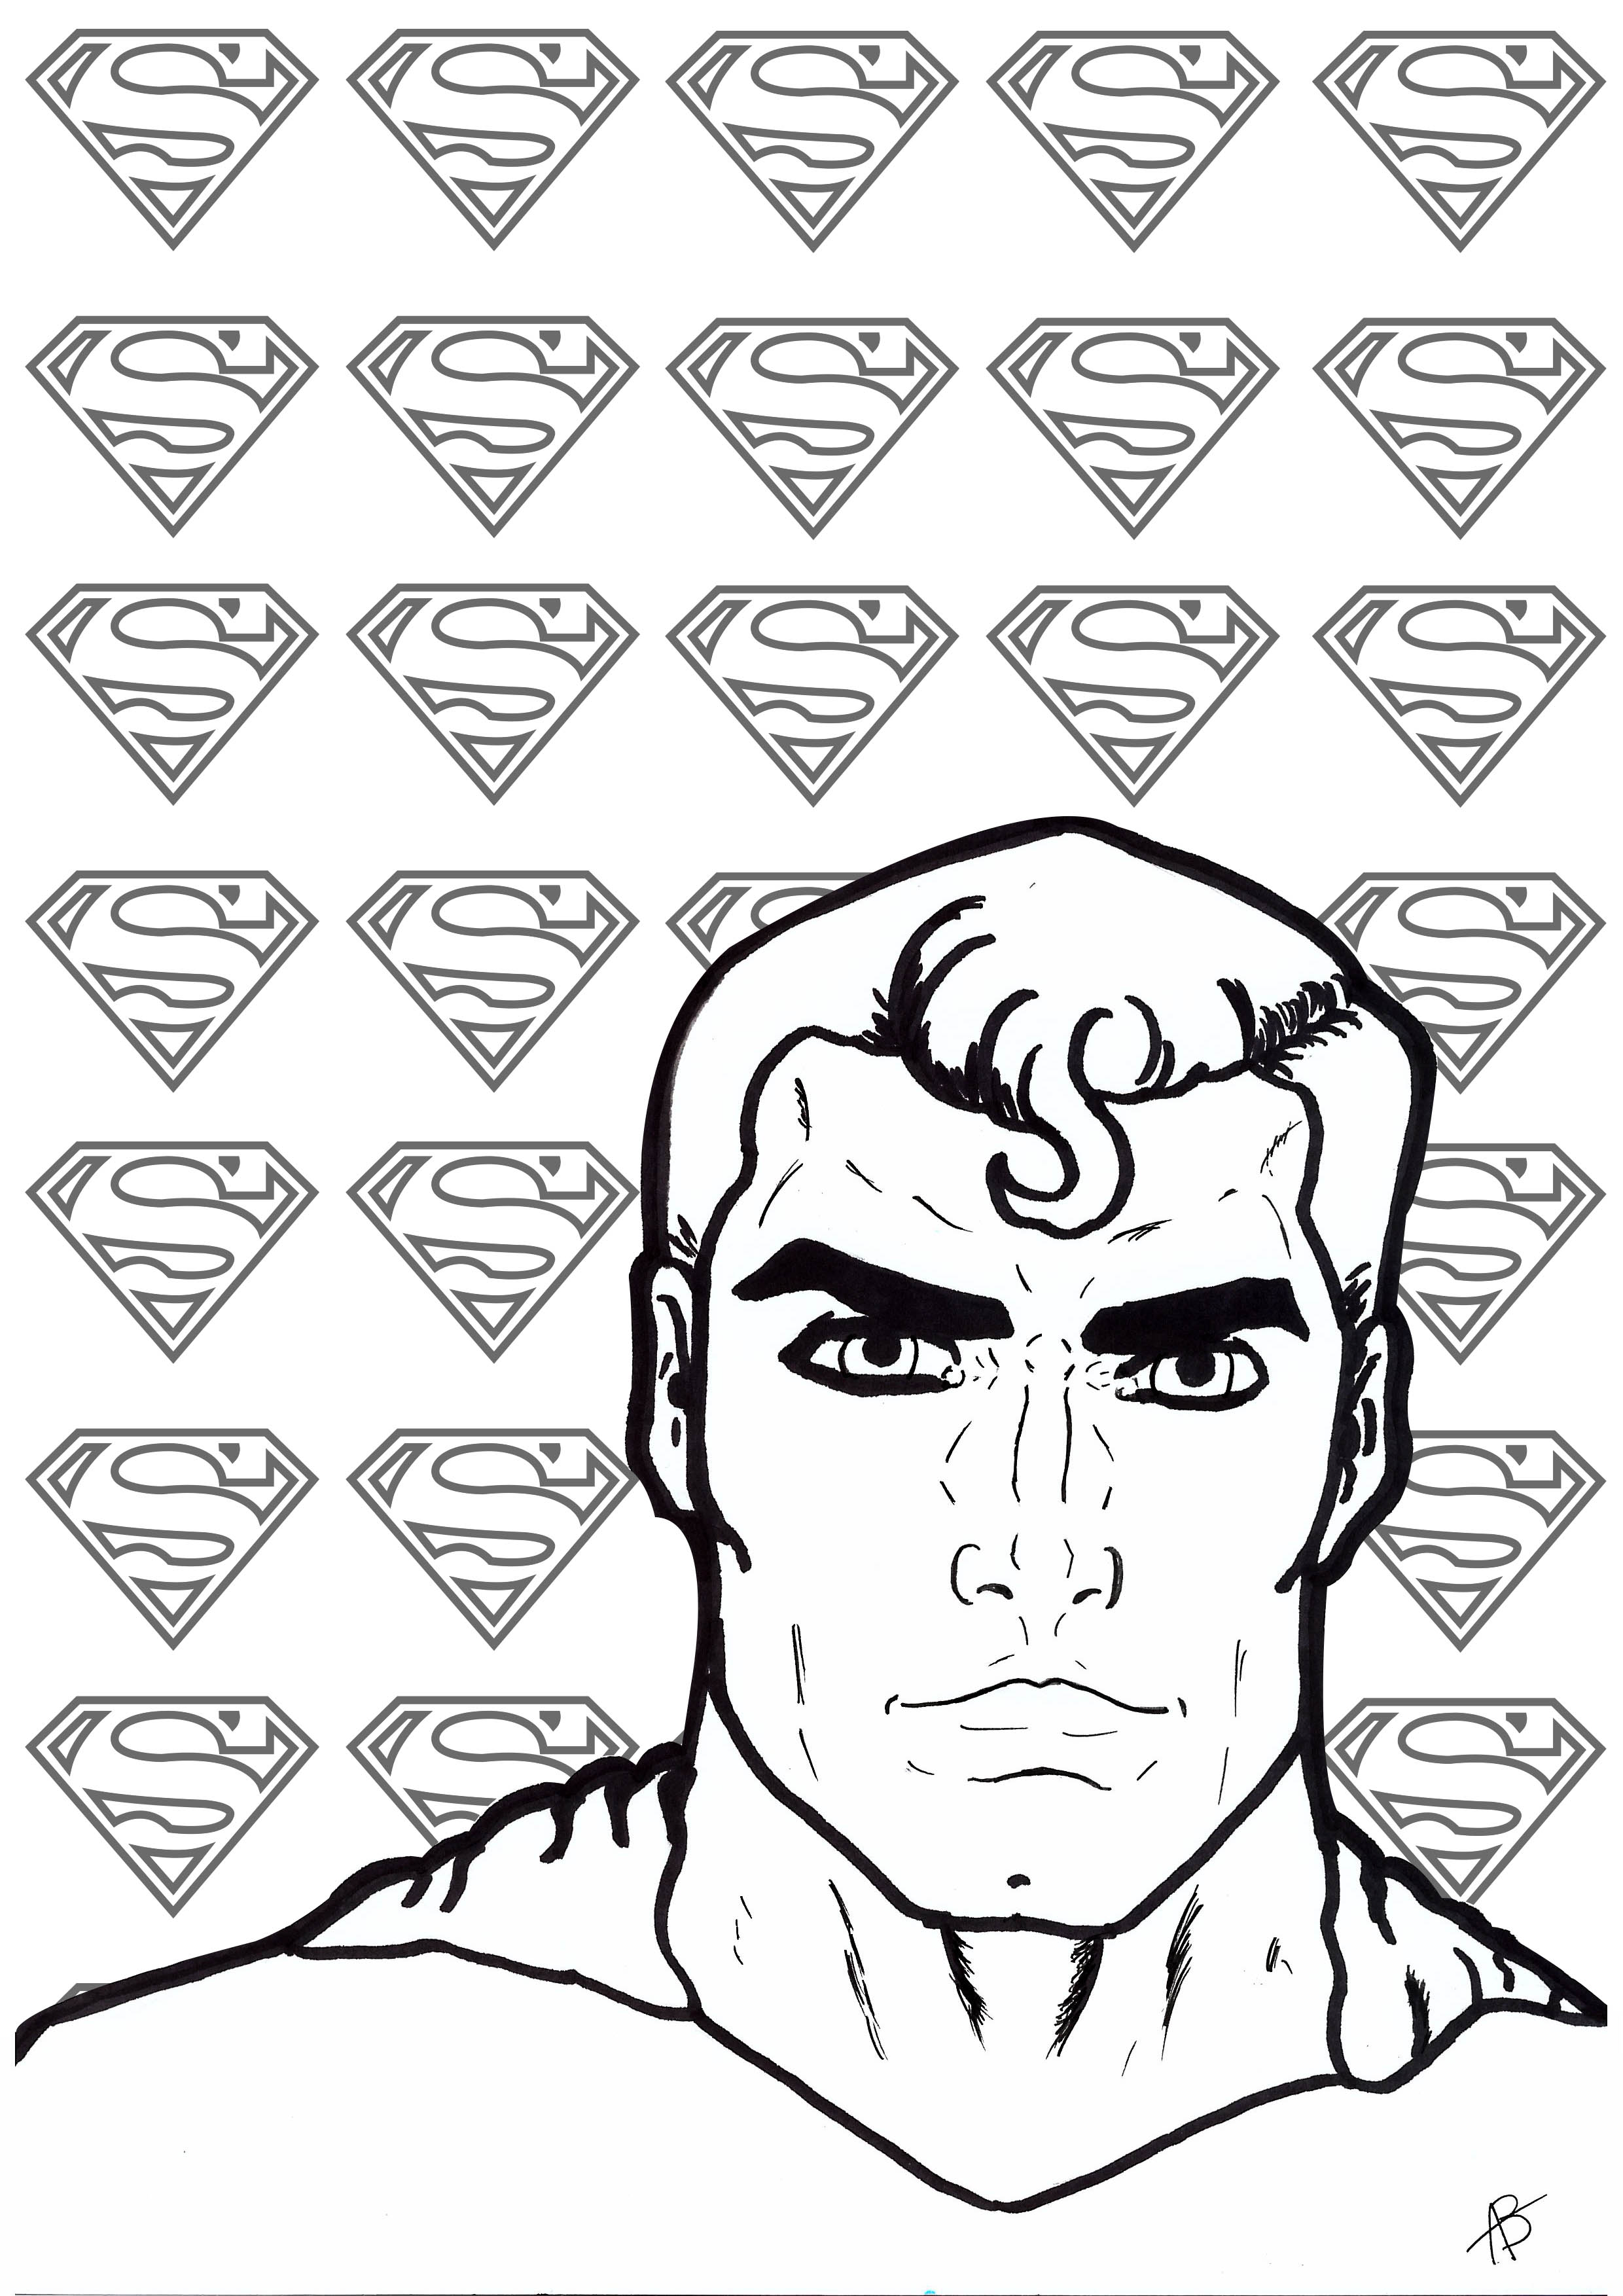 Página para colorear inspirada en Superman (personaje de DC Comics)